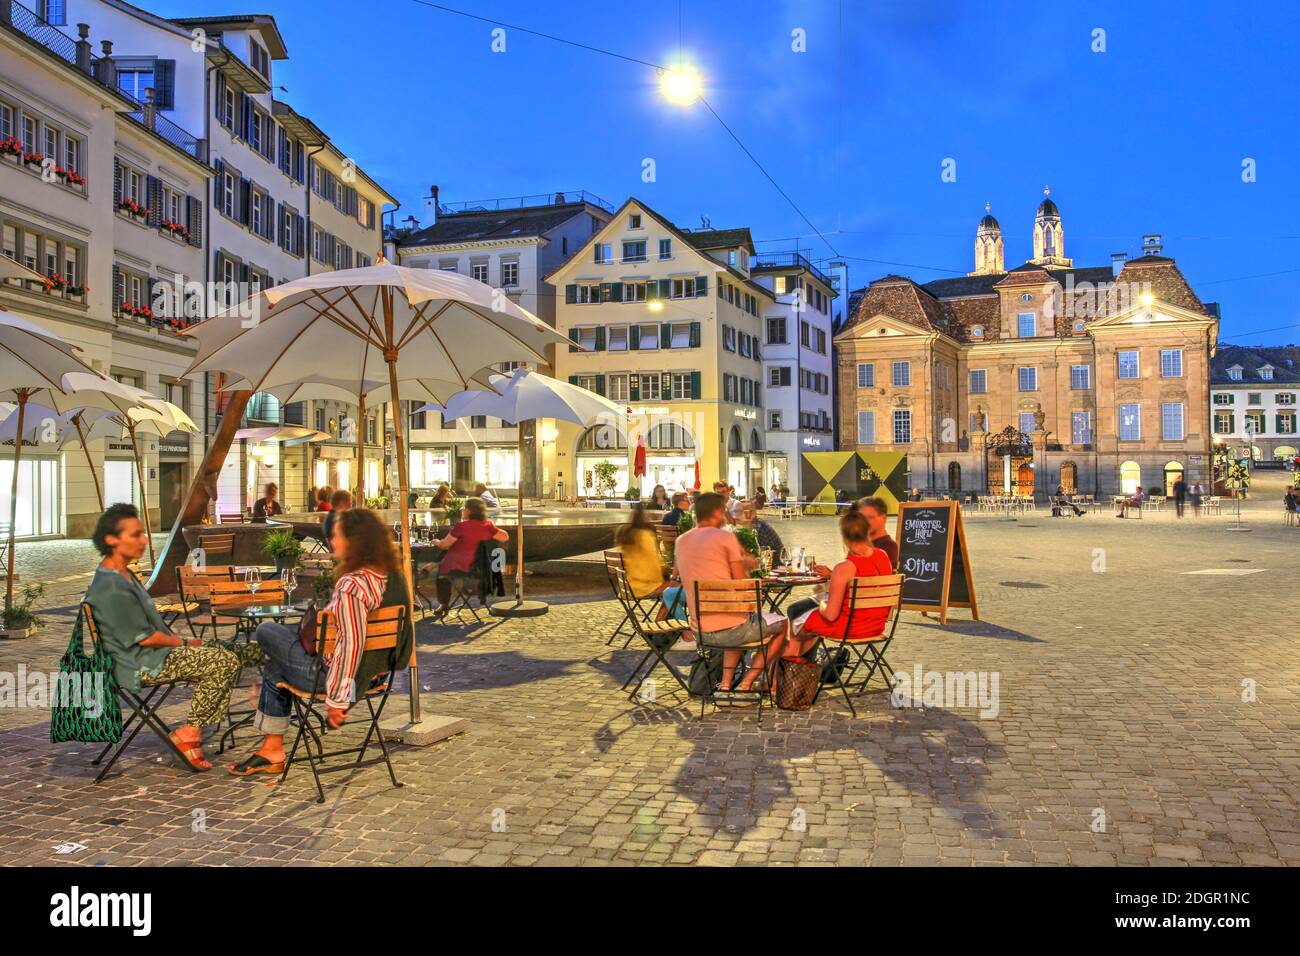 Zurigo, Svizzera - 27 giugno 2020 - scena notturna in Piazza Munsterhof nel quartiere Lindenhof di Altstadt (città vecchia) Zurigo, Svizzera, con Foto Stock